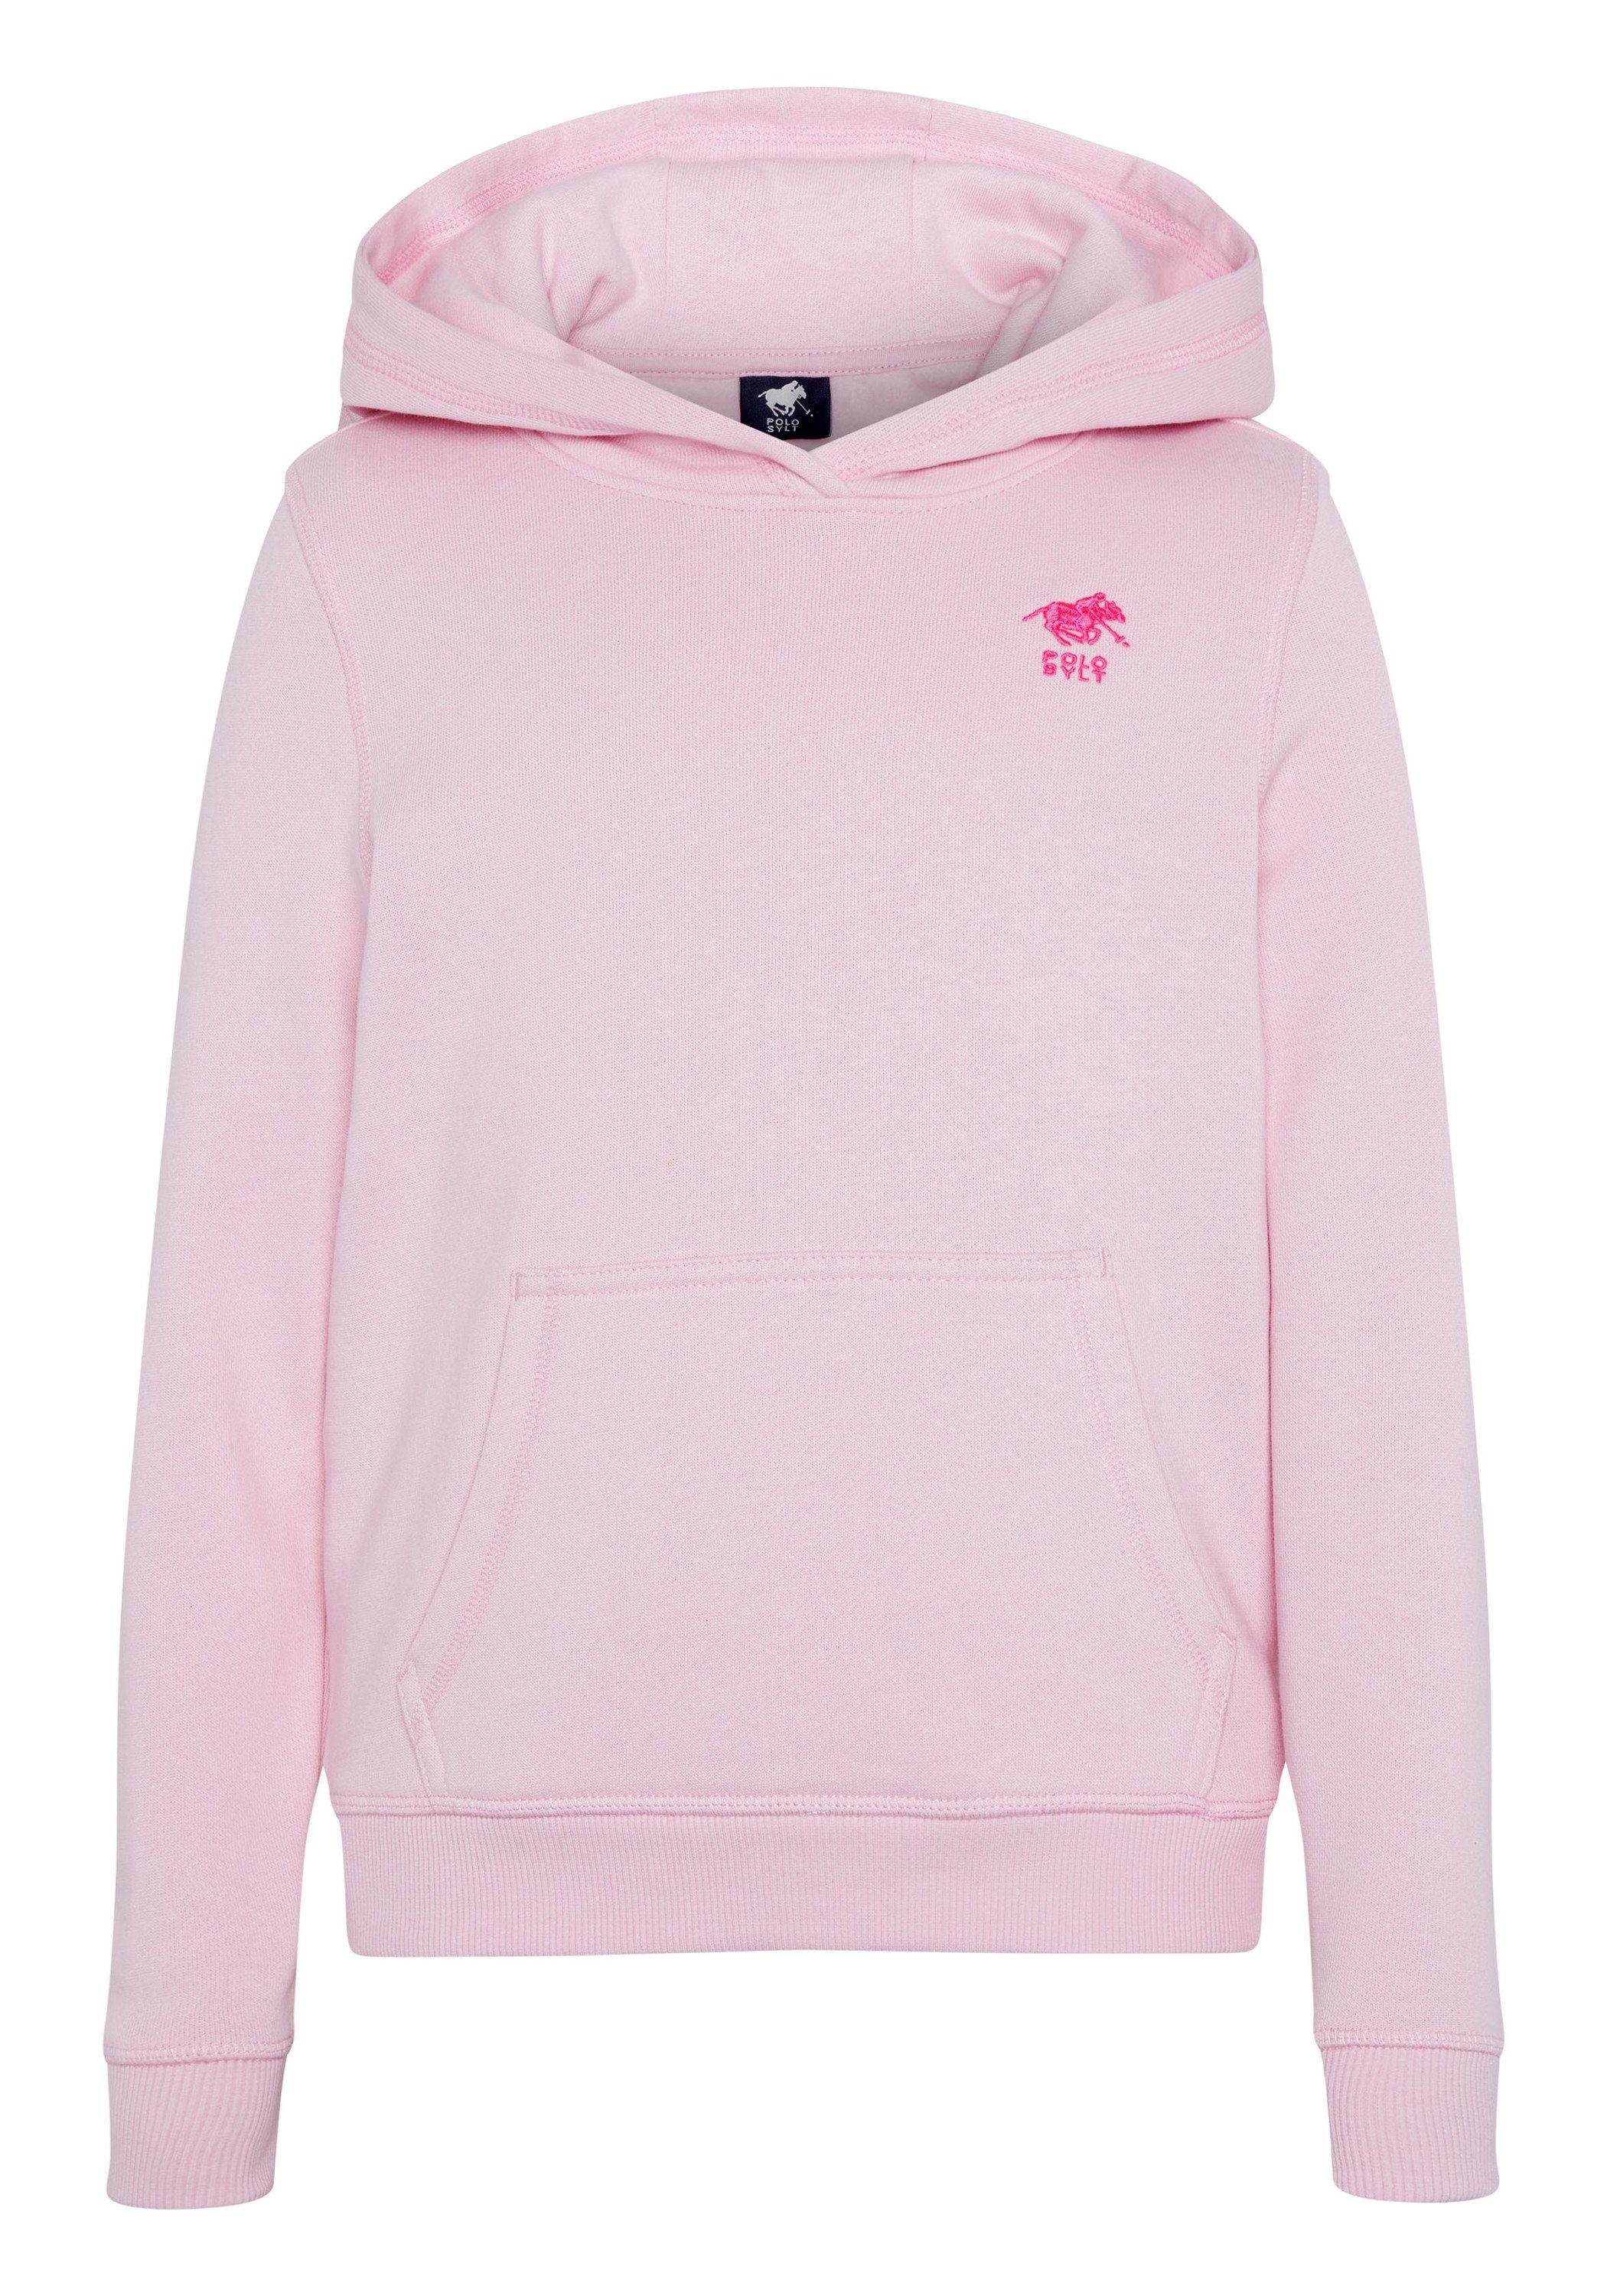 Sylt Lady Polo 13-2806 Pink Label-Stitching mit Sweatshirt